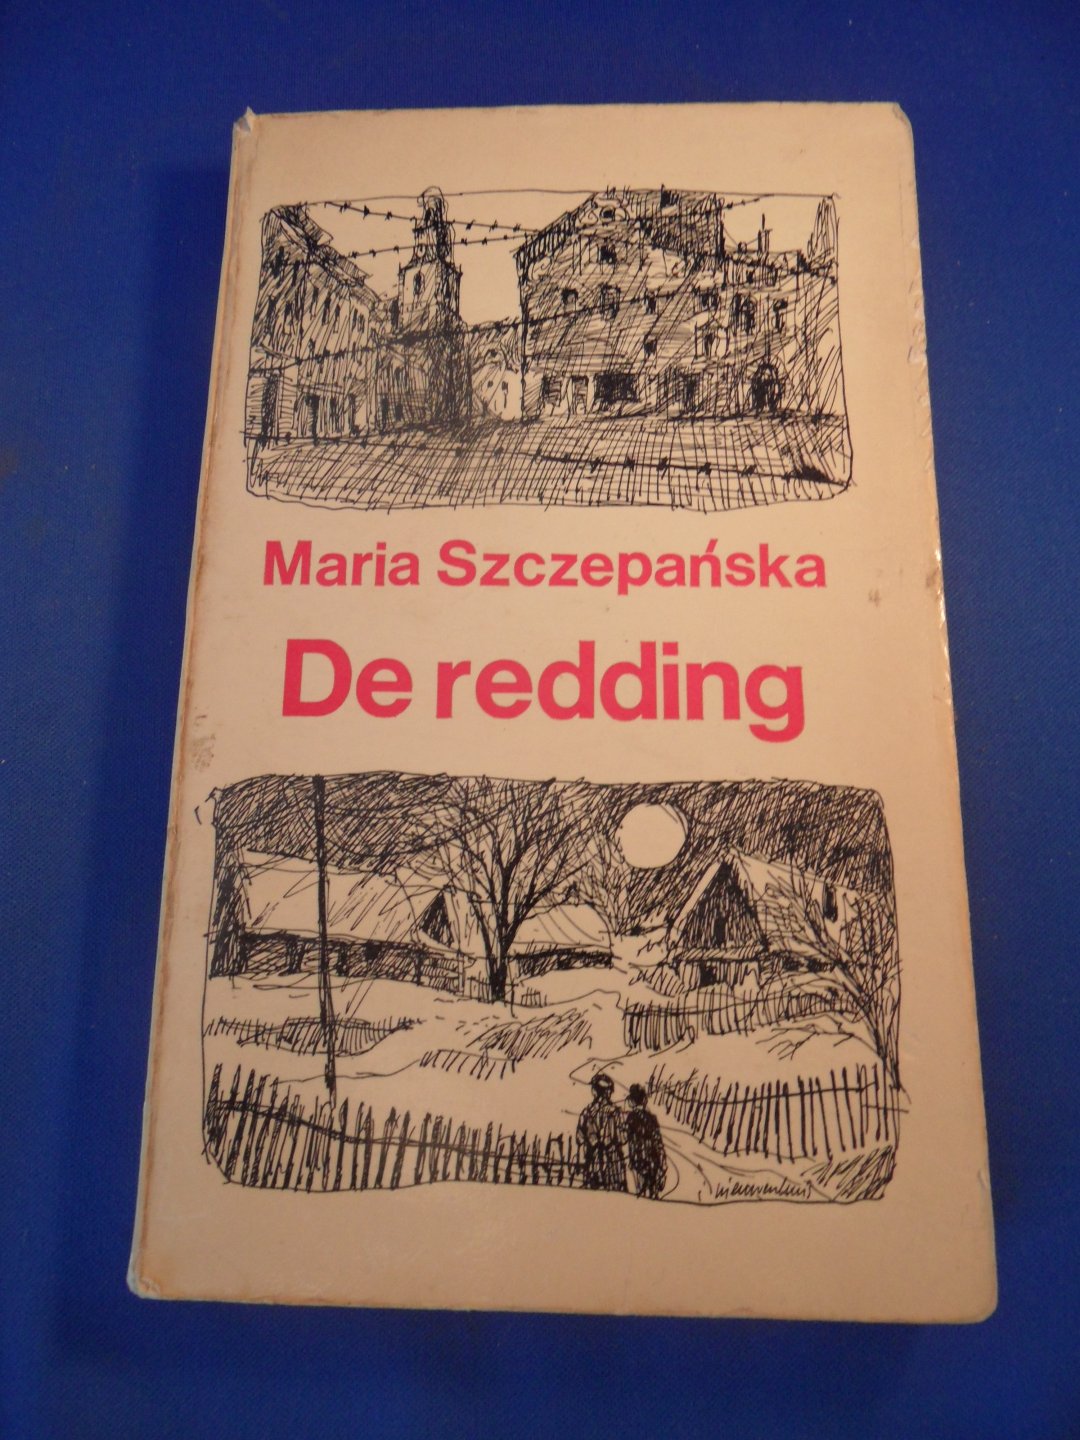 Szczepanska, Maria - De redding